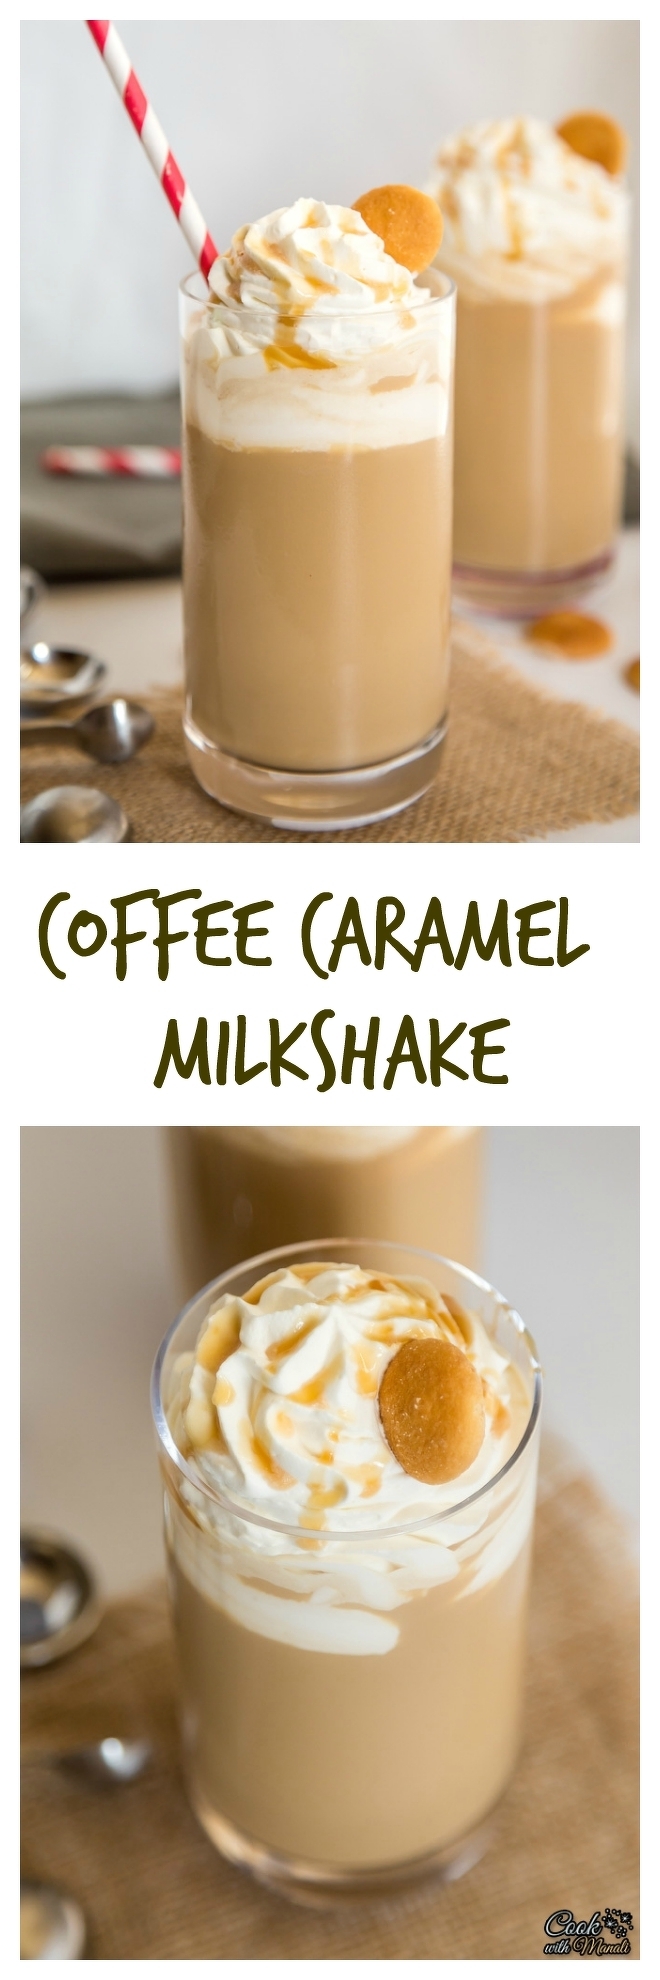 https://www.cookwithmanali.com/wp-content/uploads/2015/08/Coffee-Caramel-Milkshake-Collage-nocwm.jpg